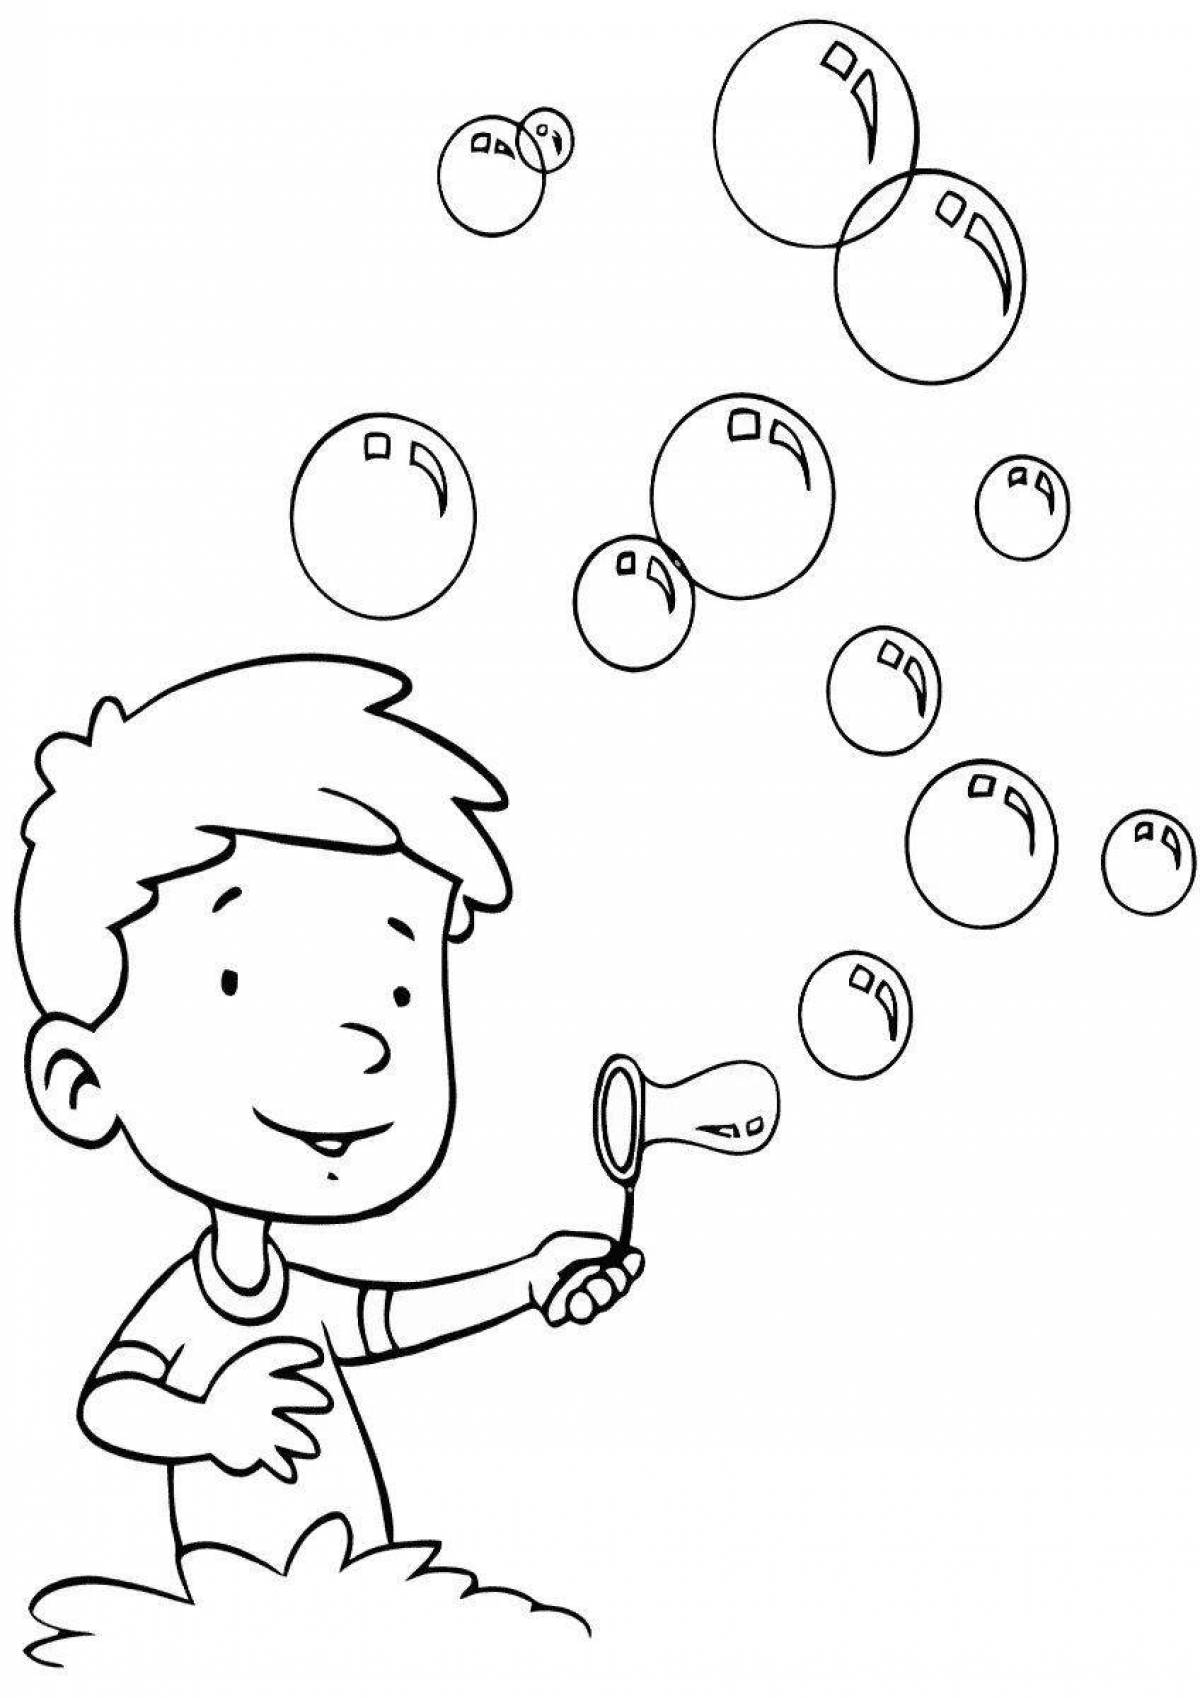 Fat bubble coloring page